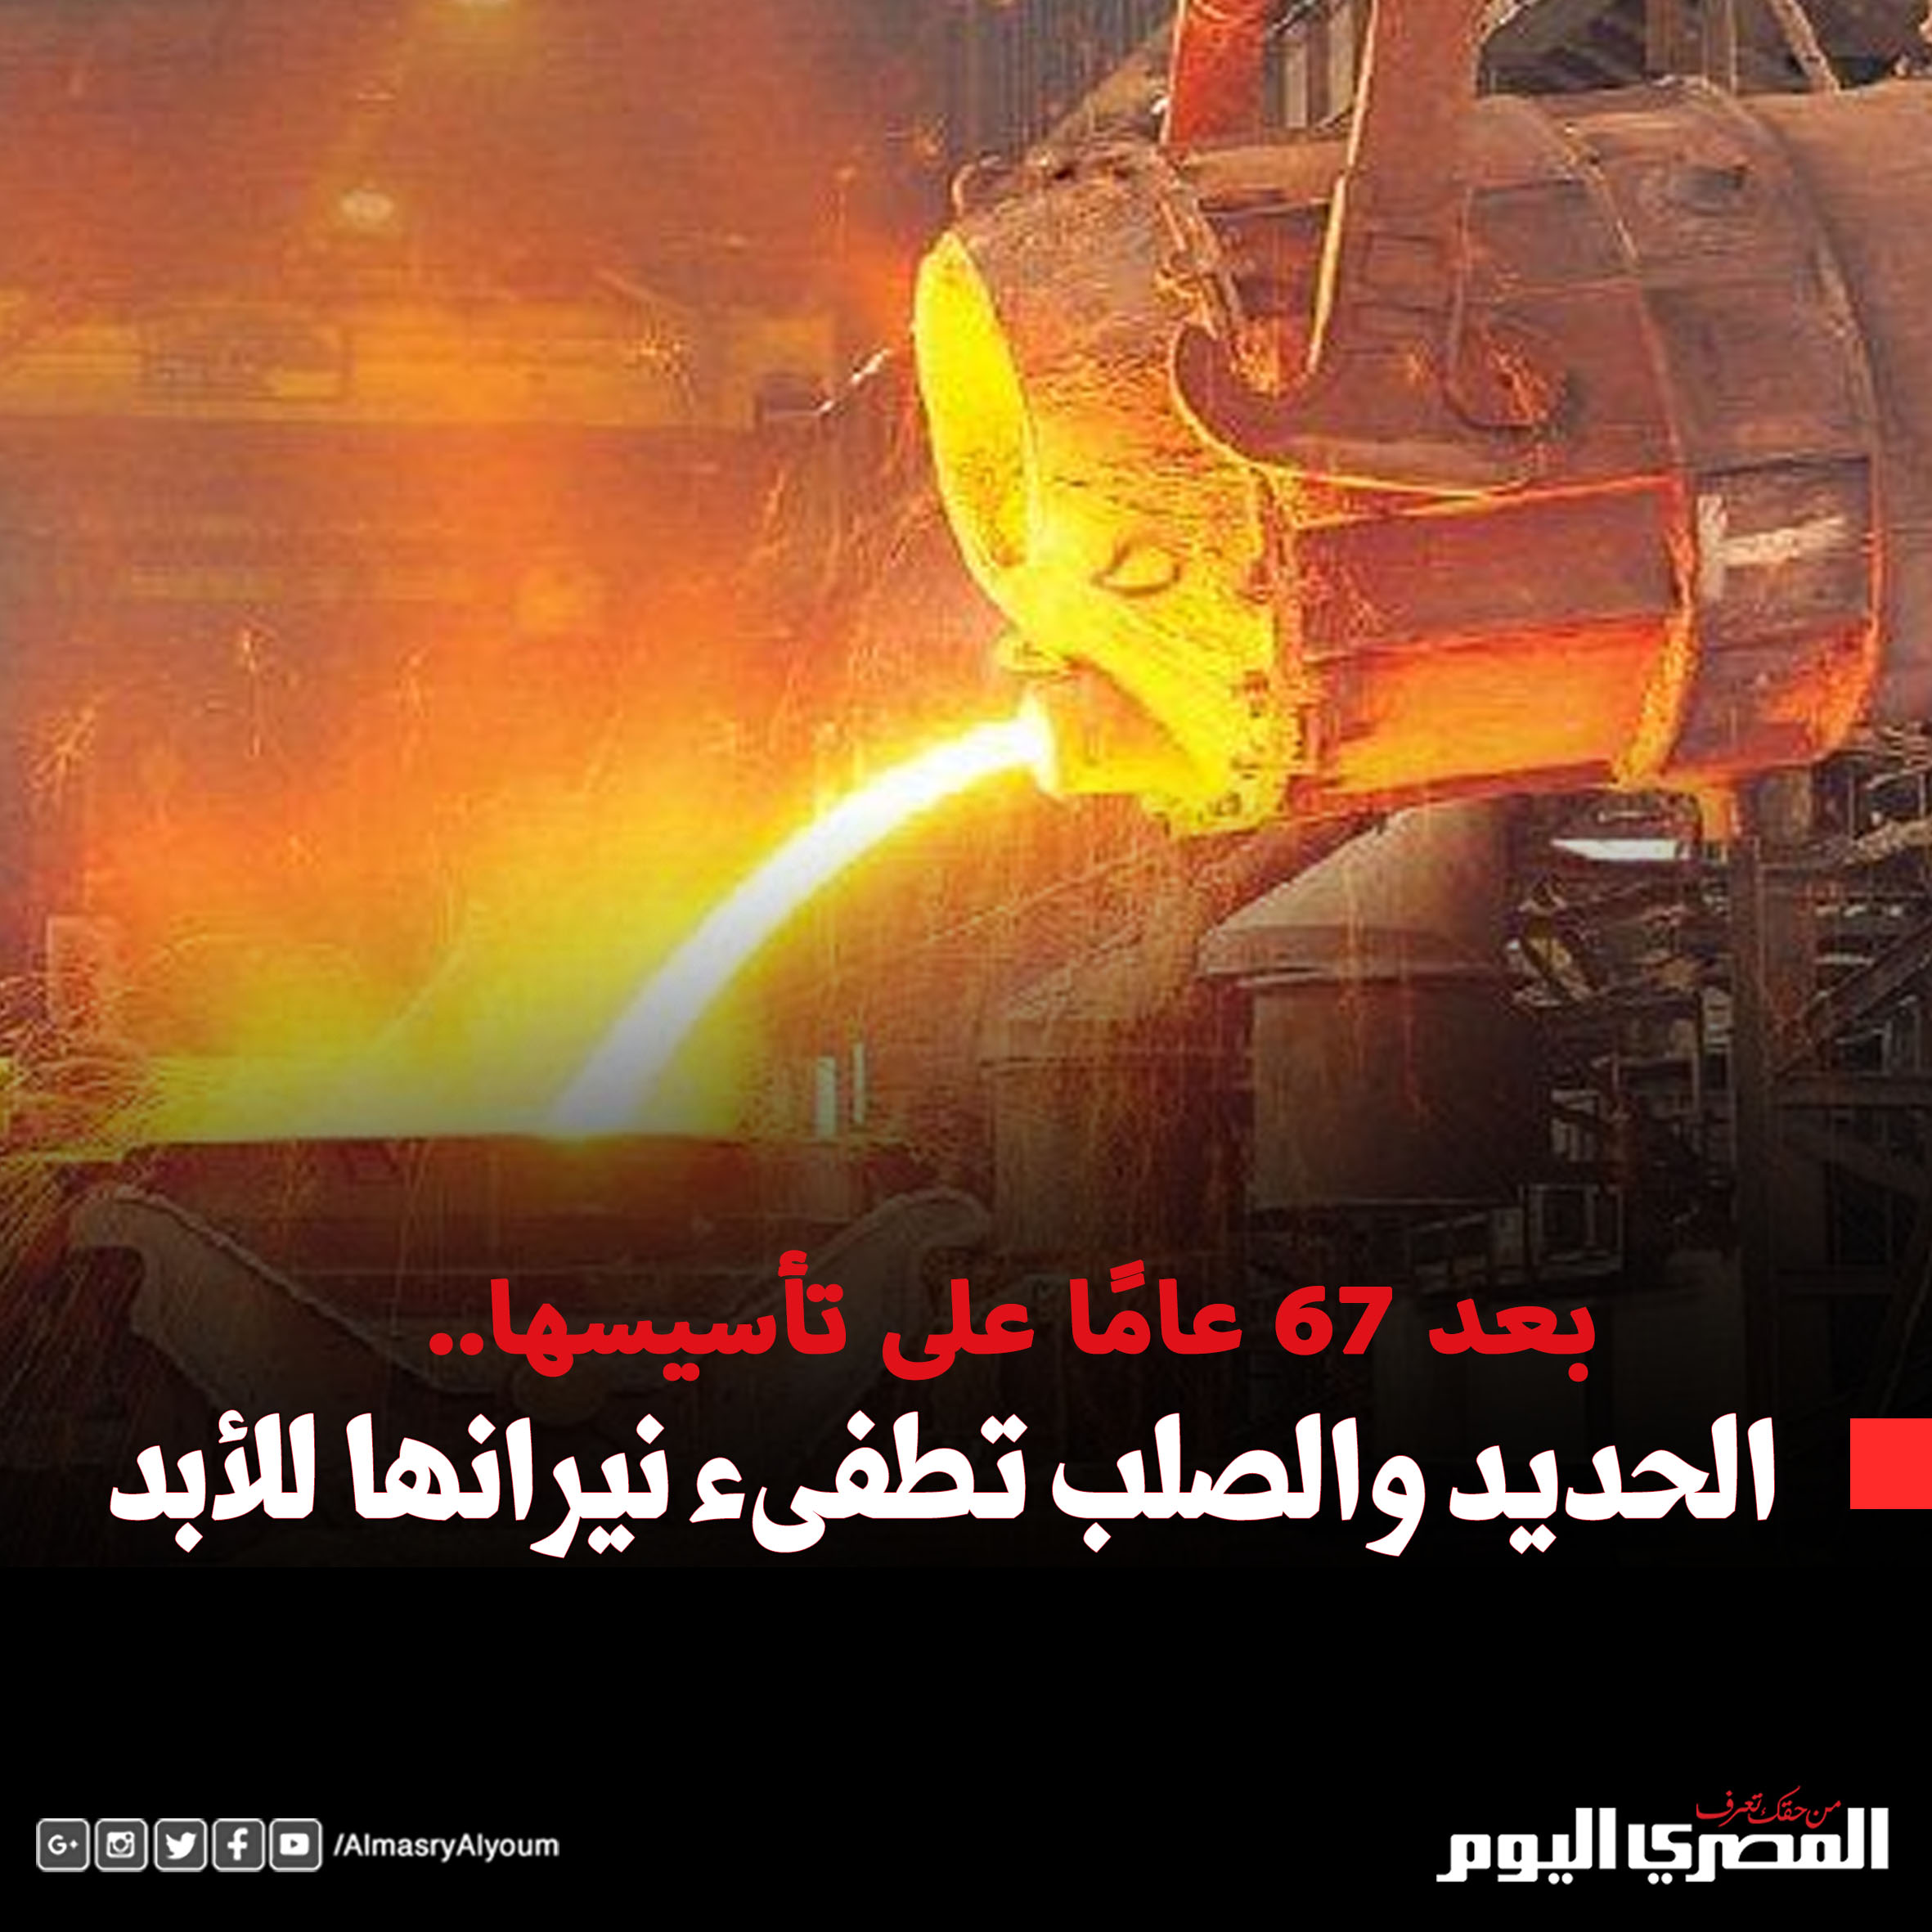  Closure of Egyptian Iron & Steel Company, May 31, 2021.